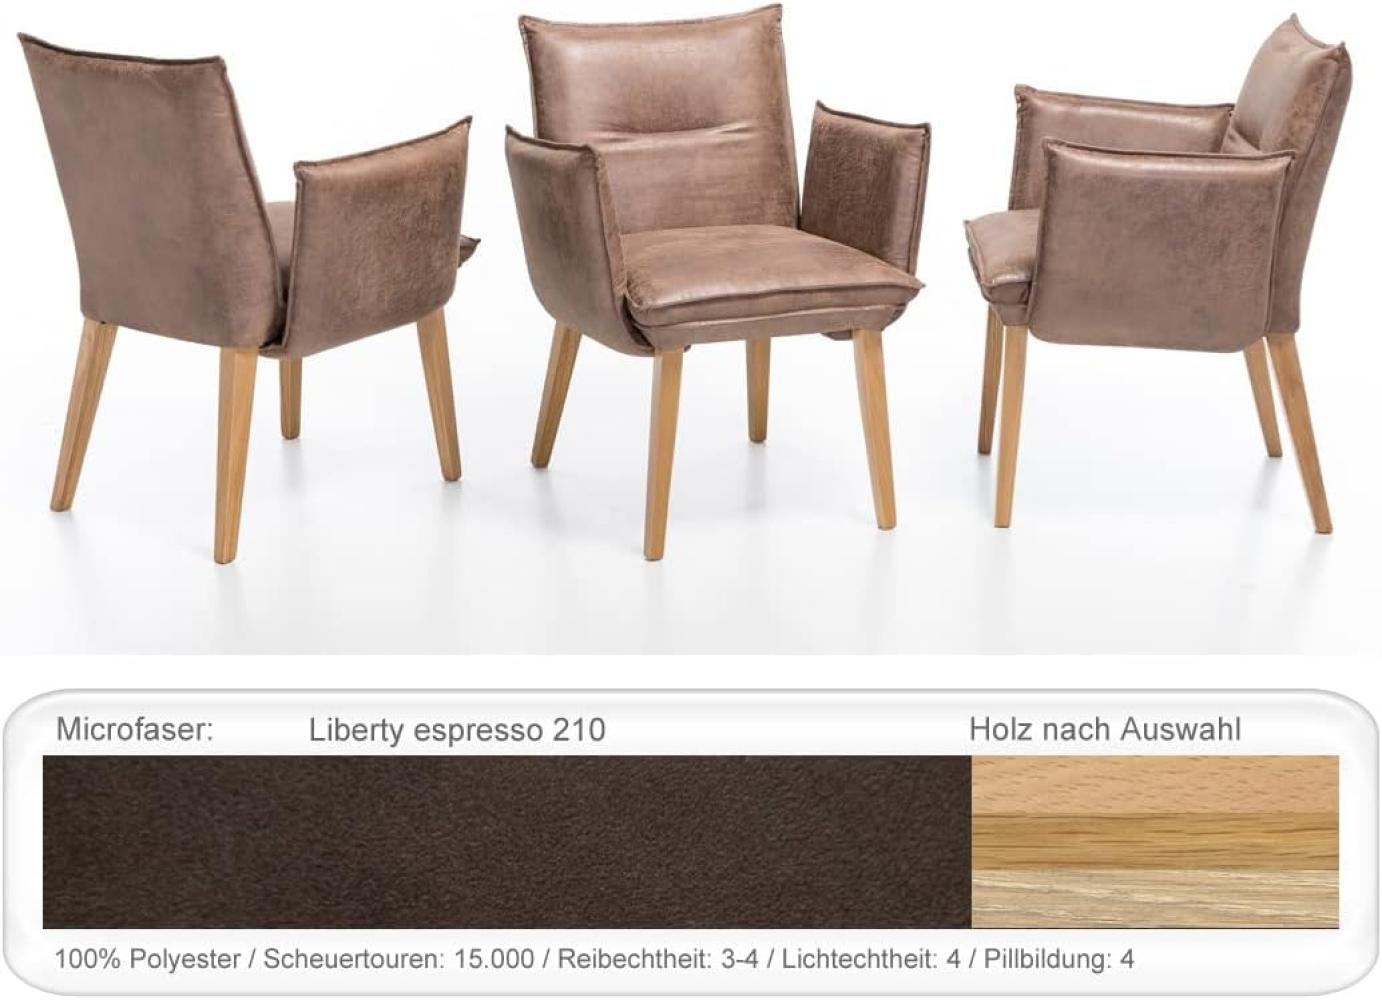 6x Sessel Gerit 2 Rücken mit Naht Polstersessel Esszimmer Massivholz Eiche natur lackiert, Liberty espresso Bild 1